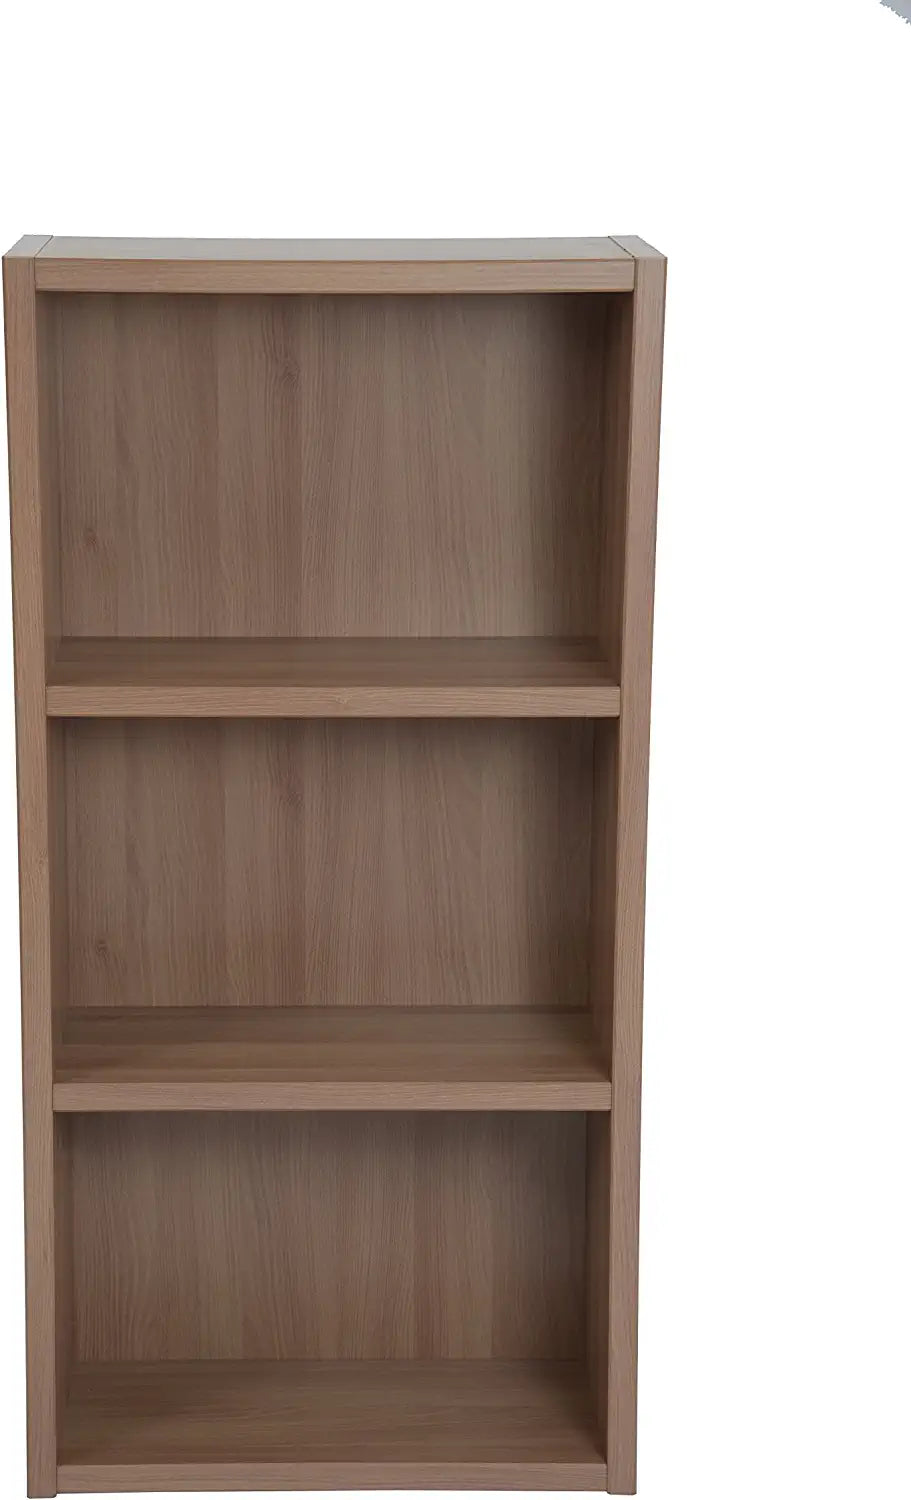 Boraam Techny Collection Hartley Hollow Core Bookcase, Light Oak